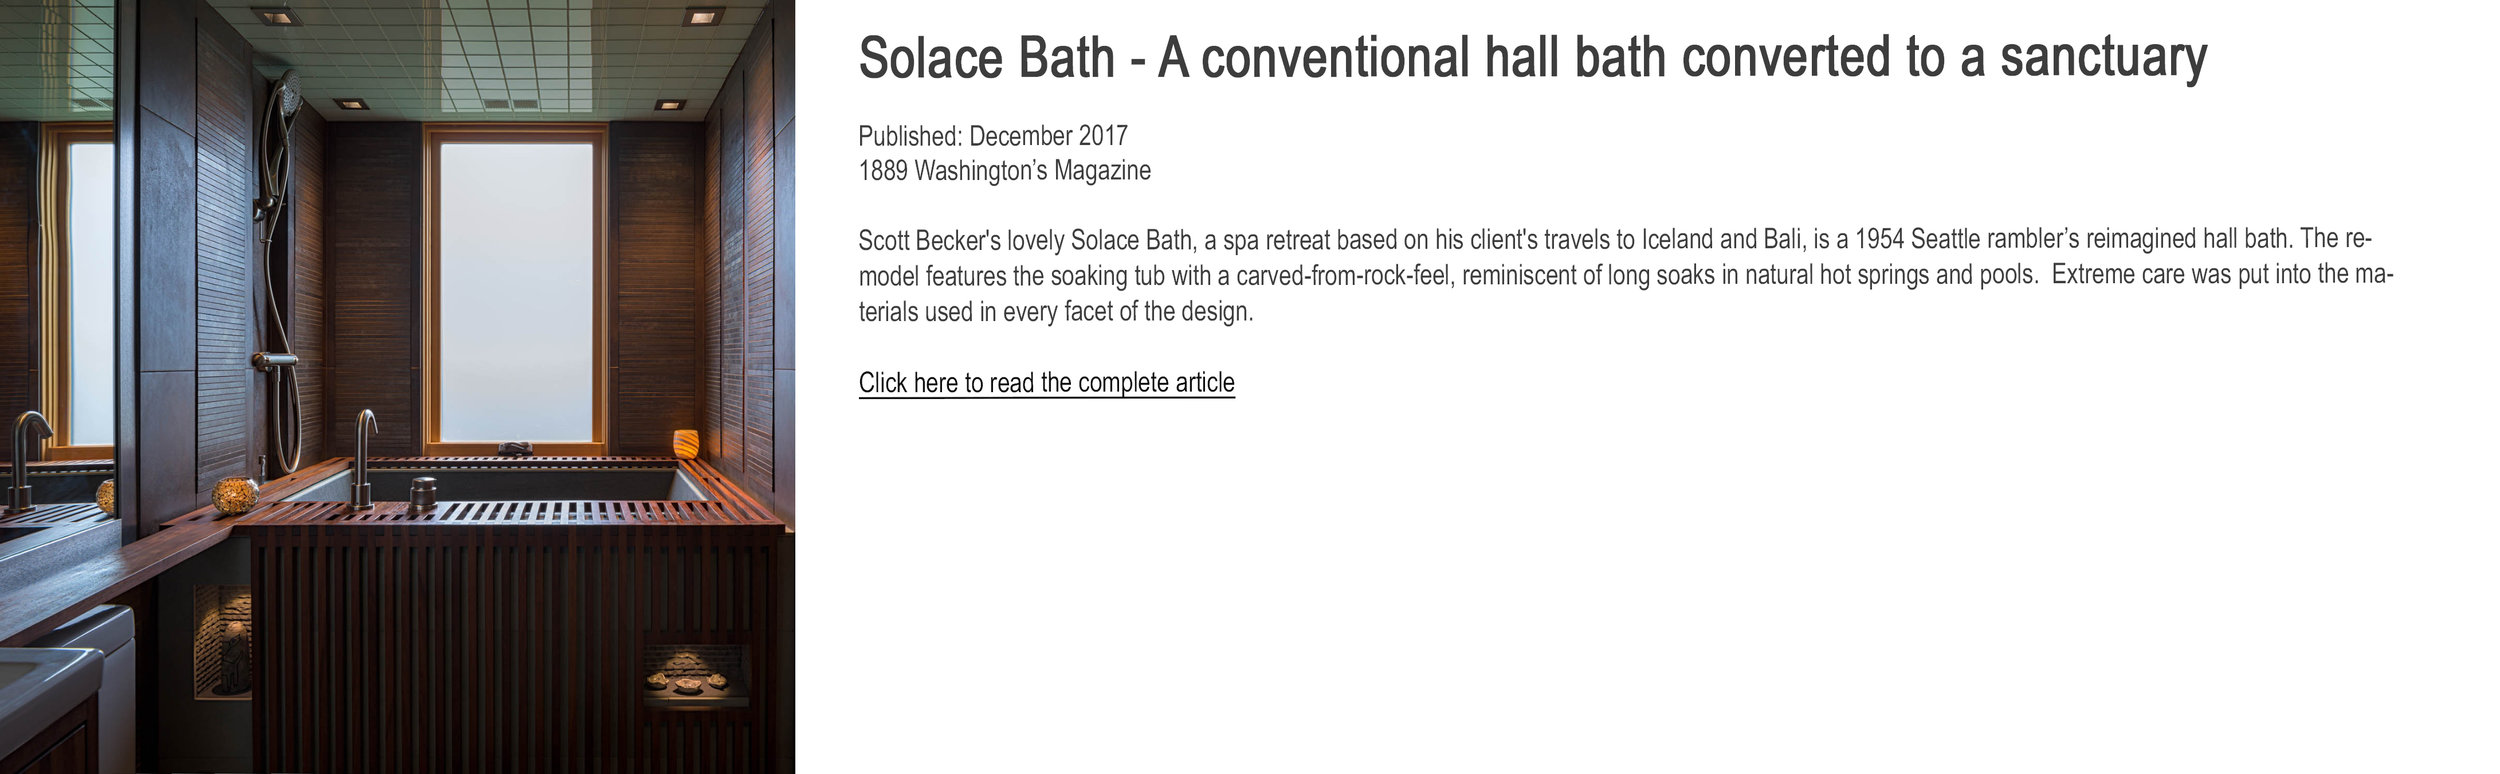 Solace Bath.jpg